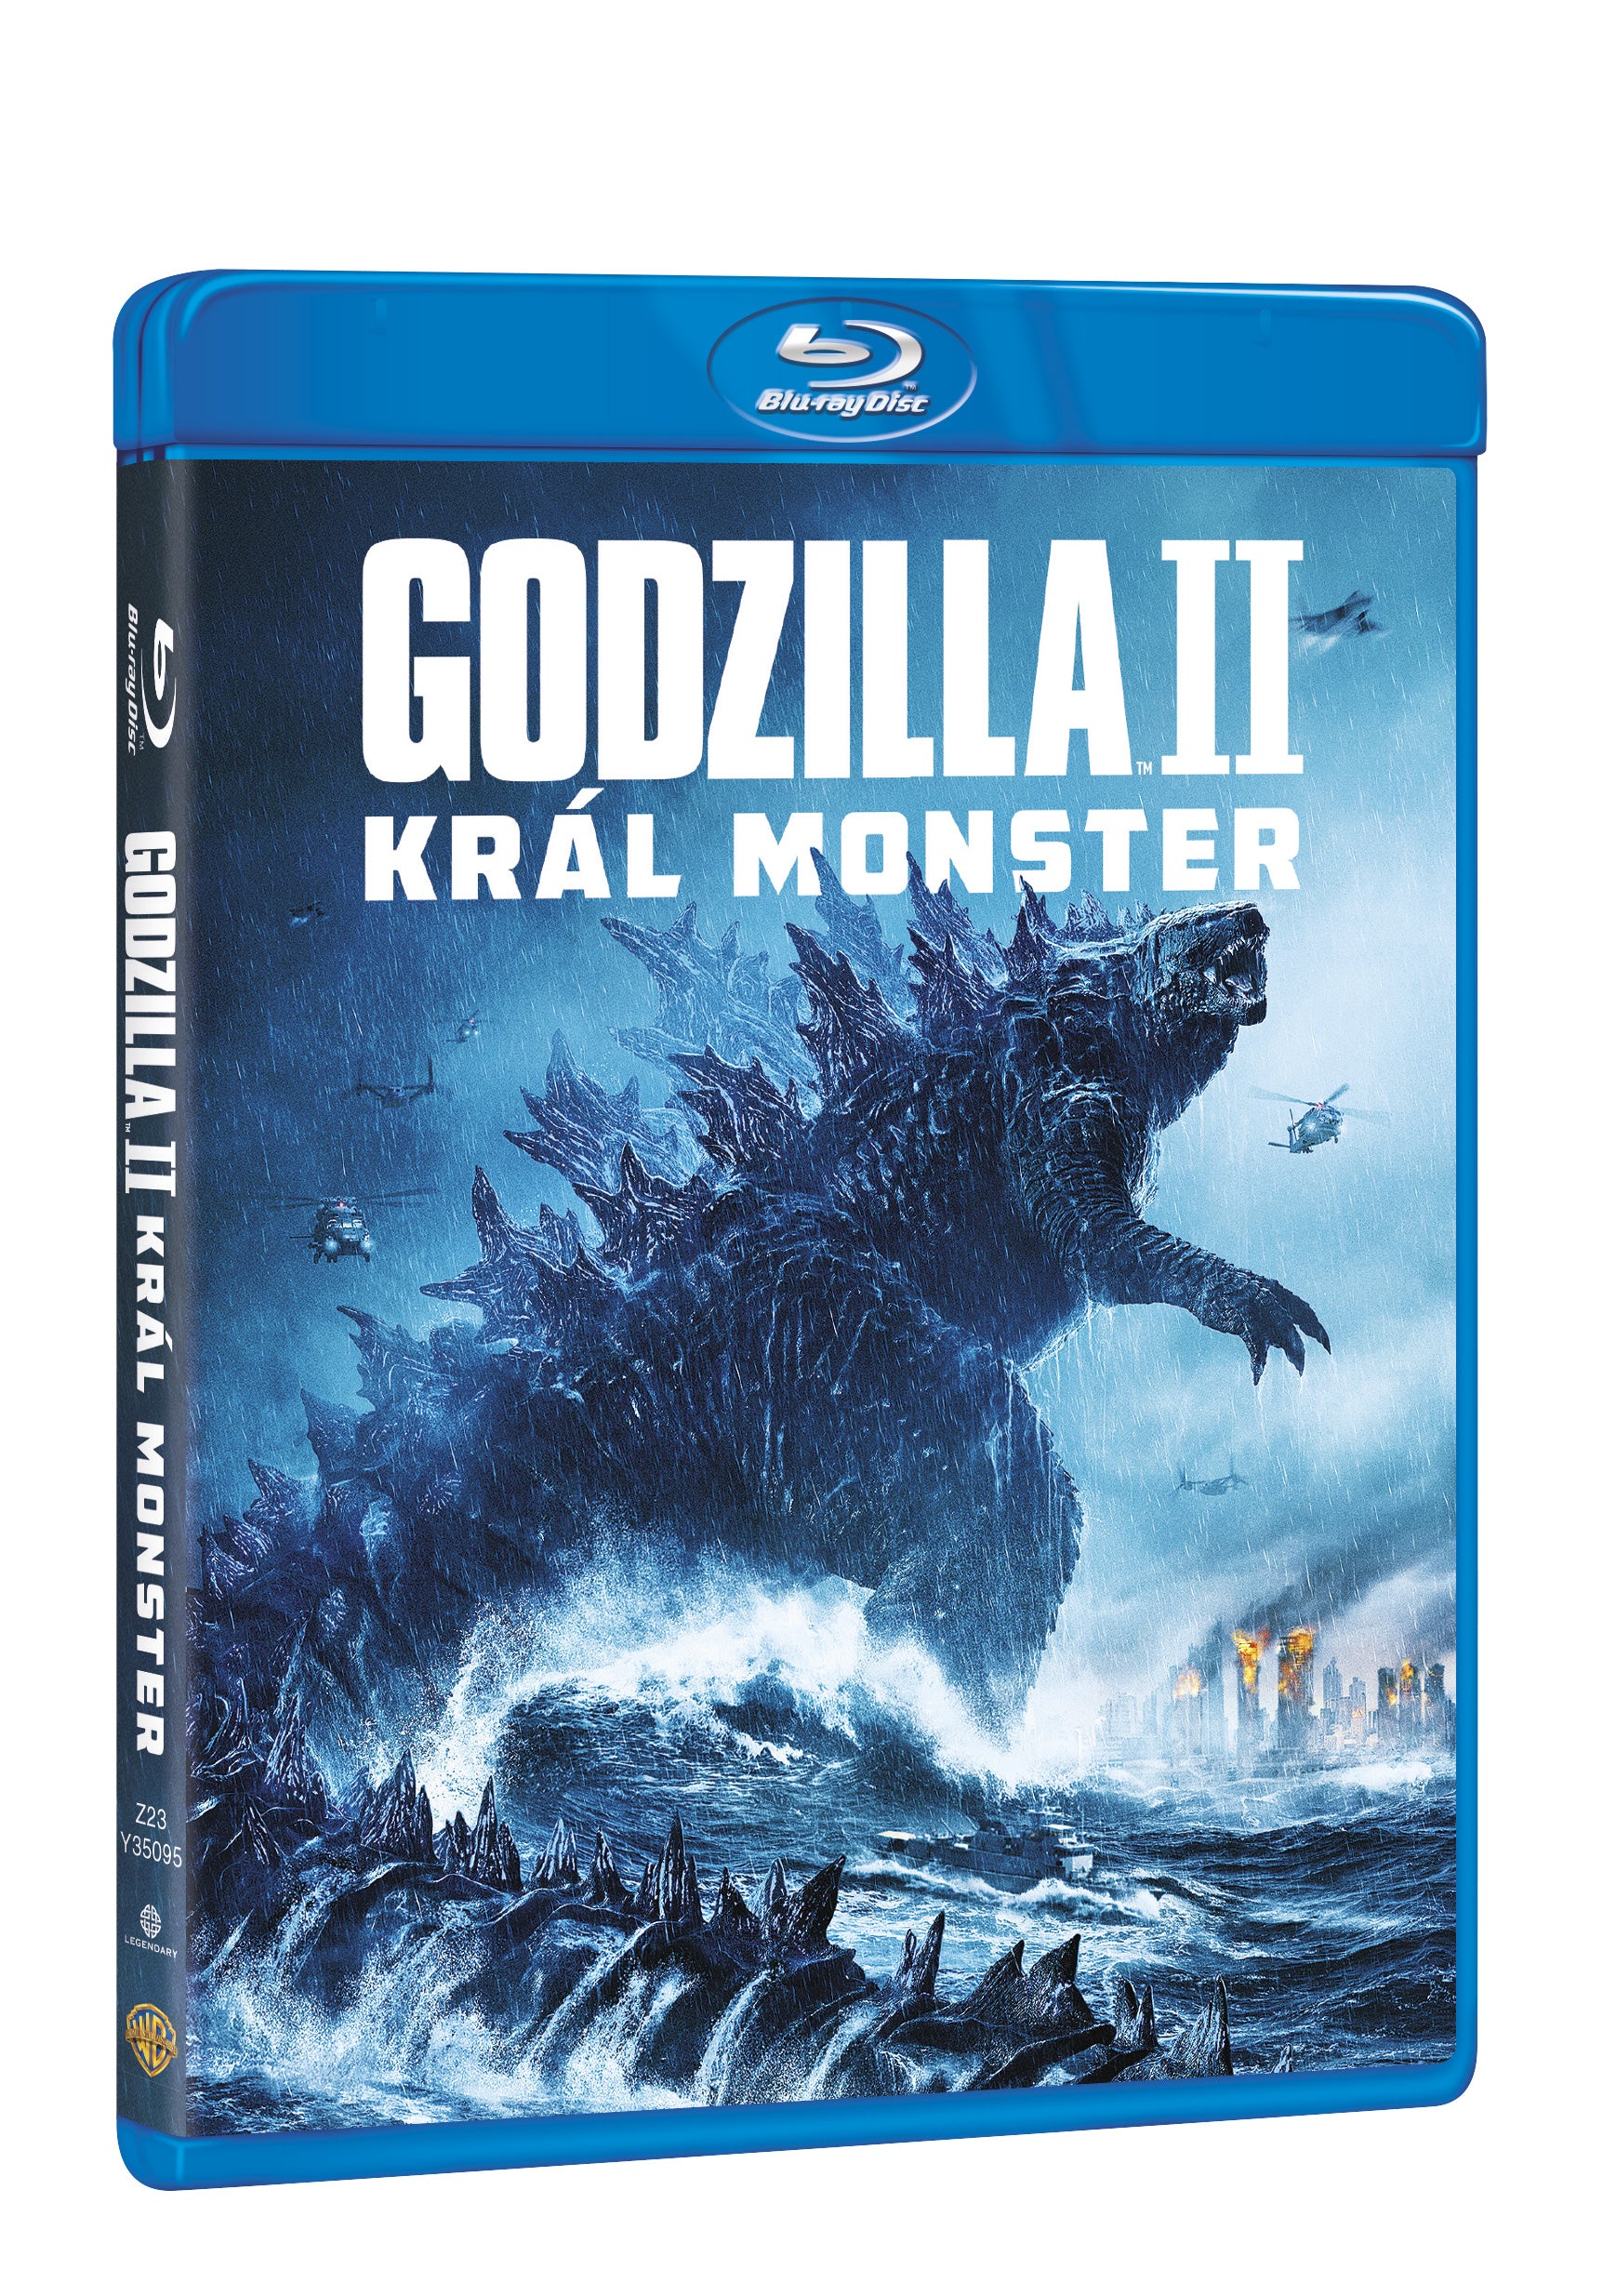 Godzilla II Kral monster BD / Godzilla: King of the Monsters - Czech version